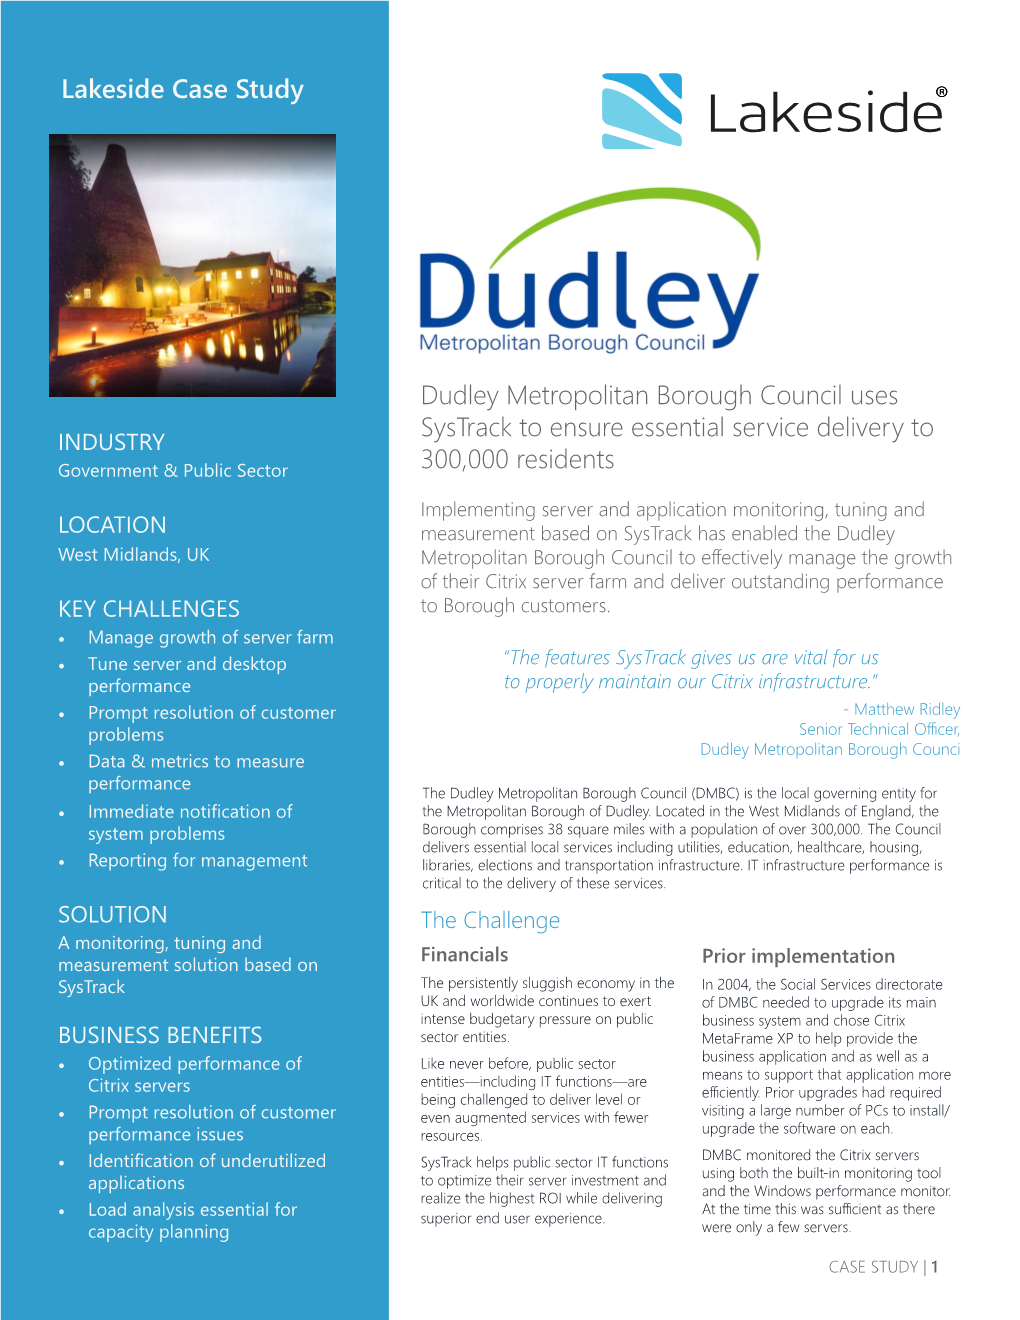 Lakeside Case Study Dudley Metropolitan Borough Council Uses